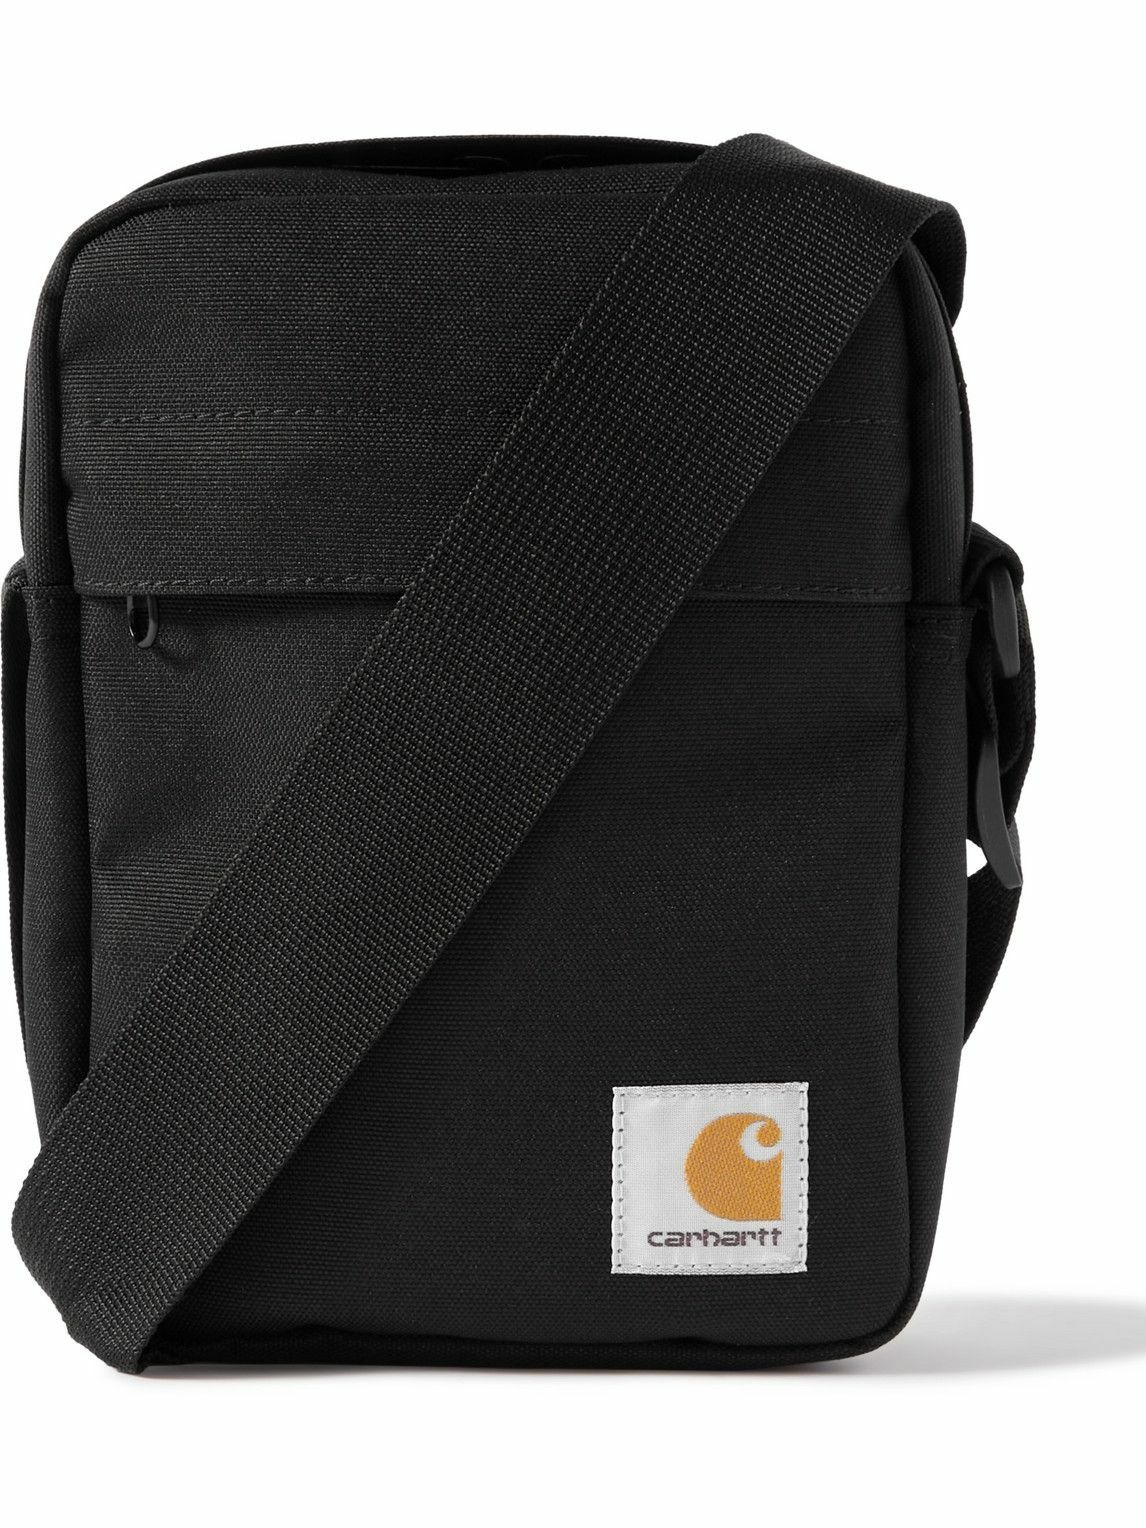 CARHARTT Messenger/Laptopcomputer Bag CrossBody Bag - Black NWT